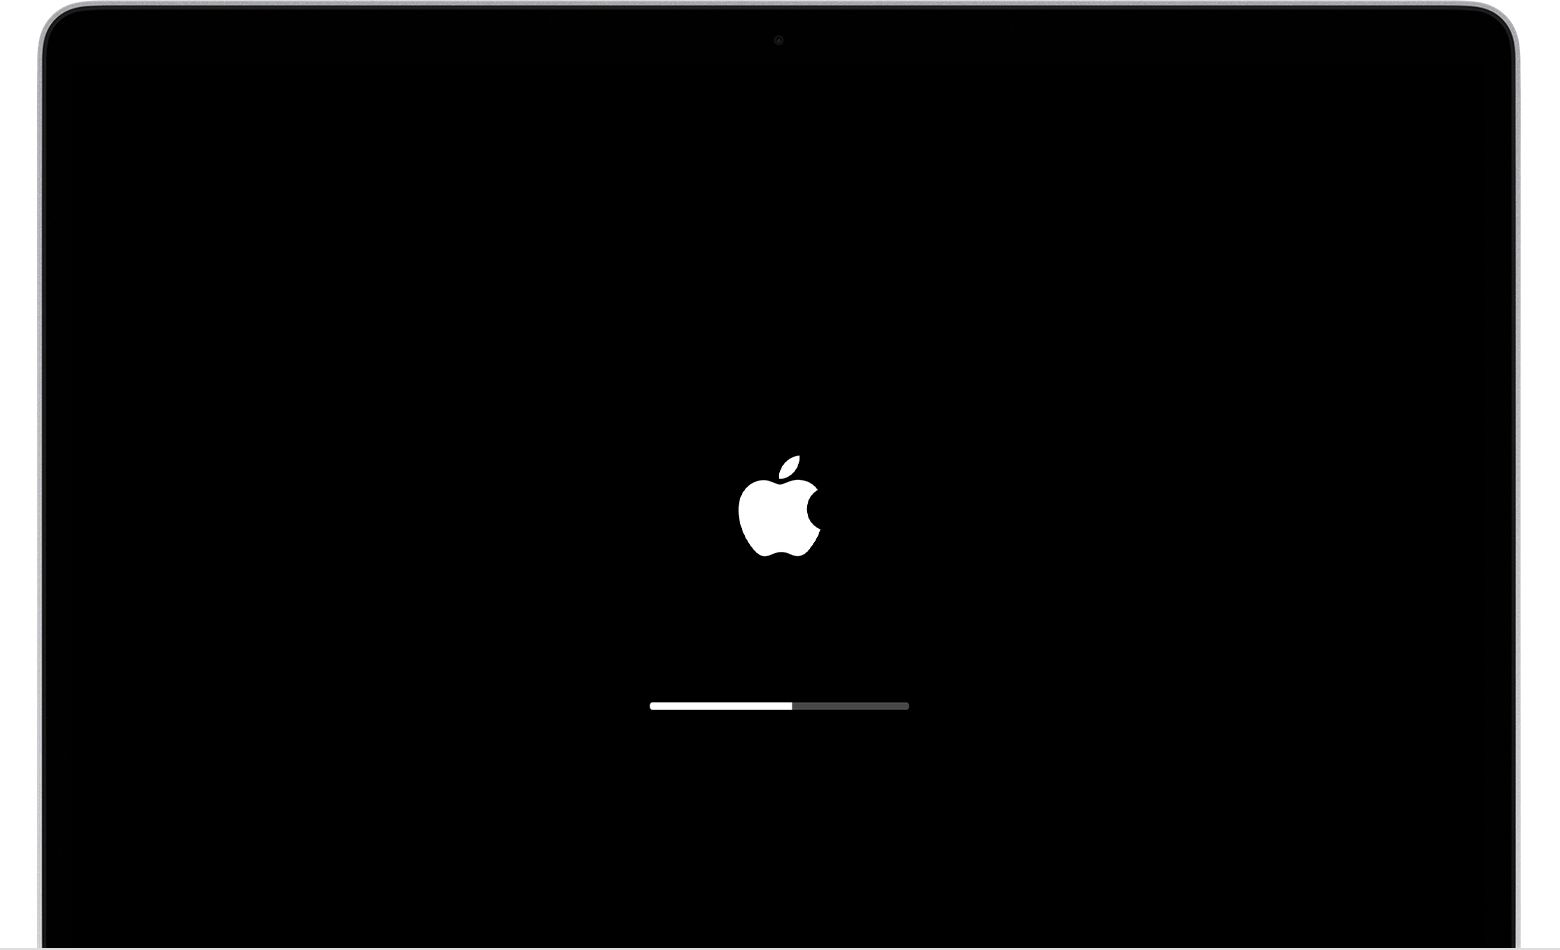 Apple logo with progress bar